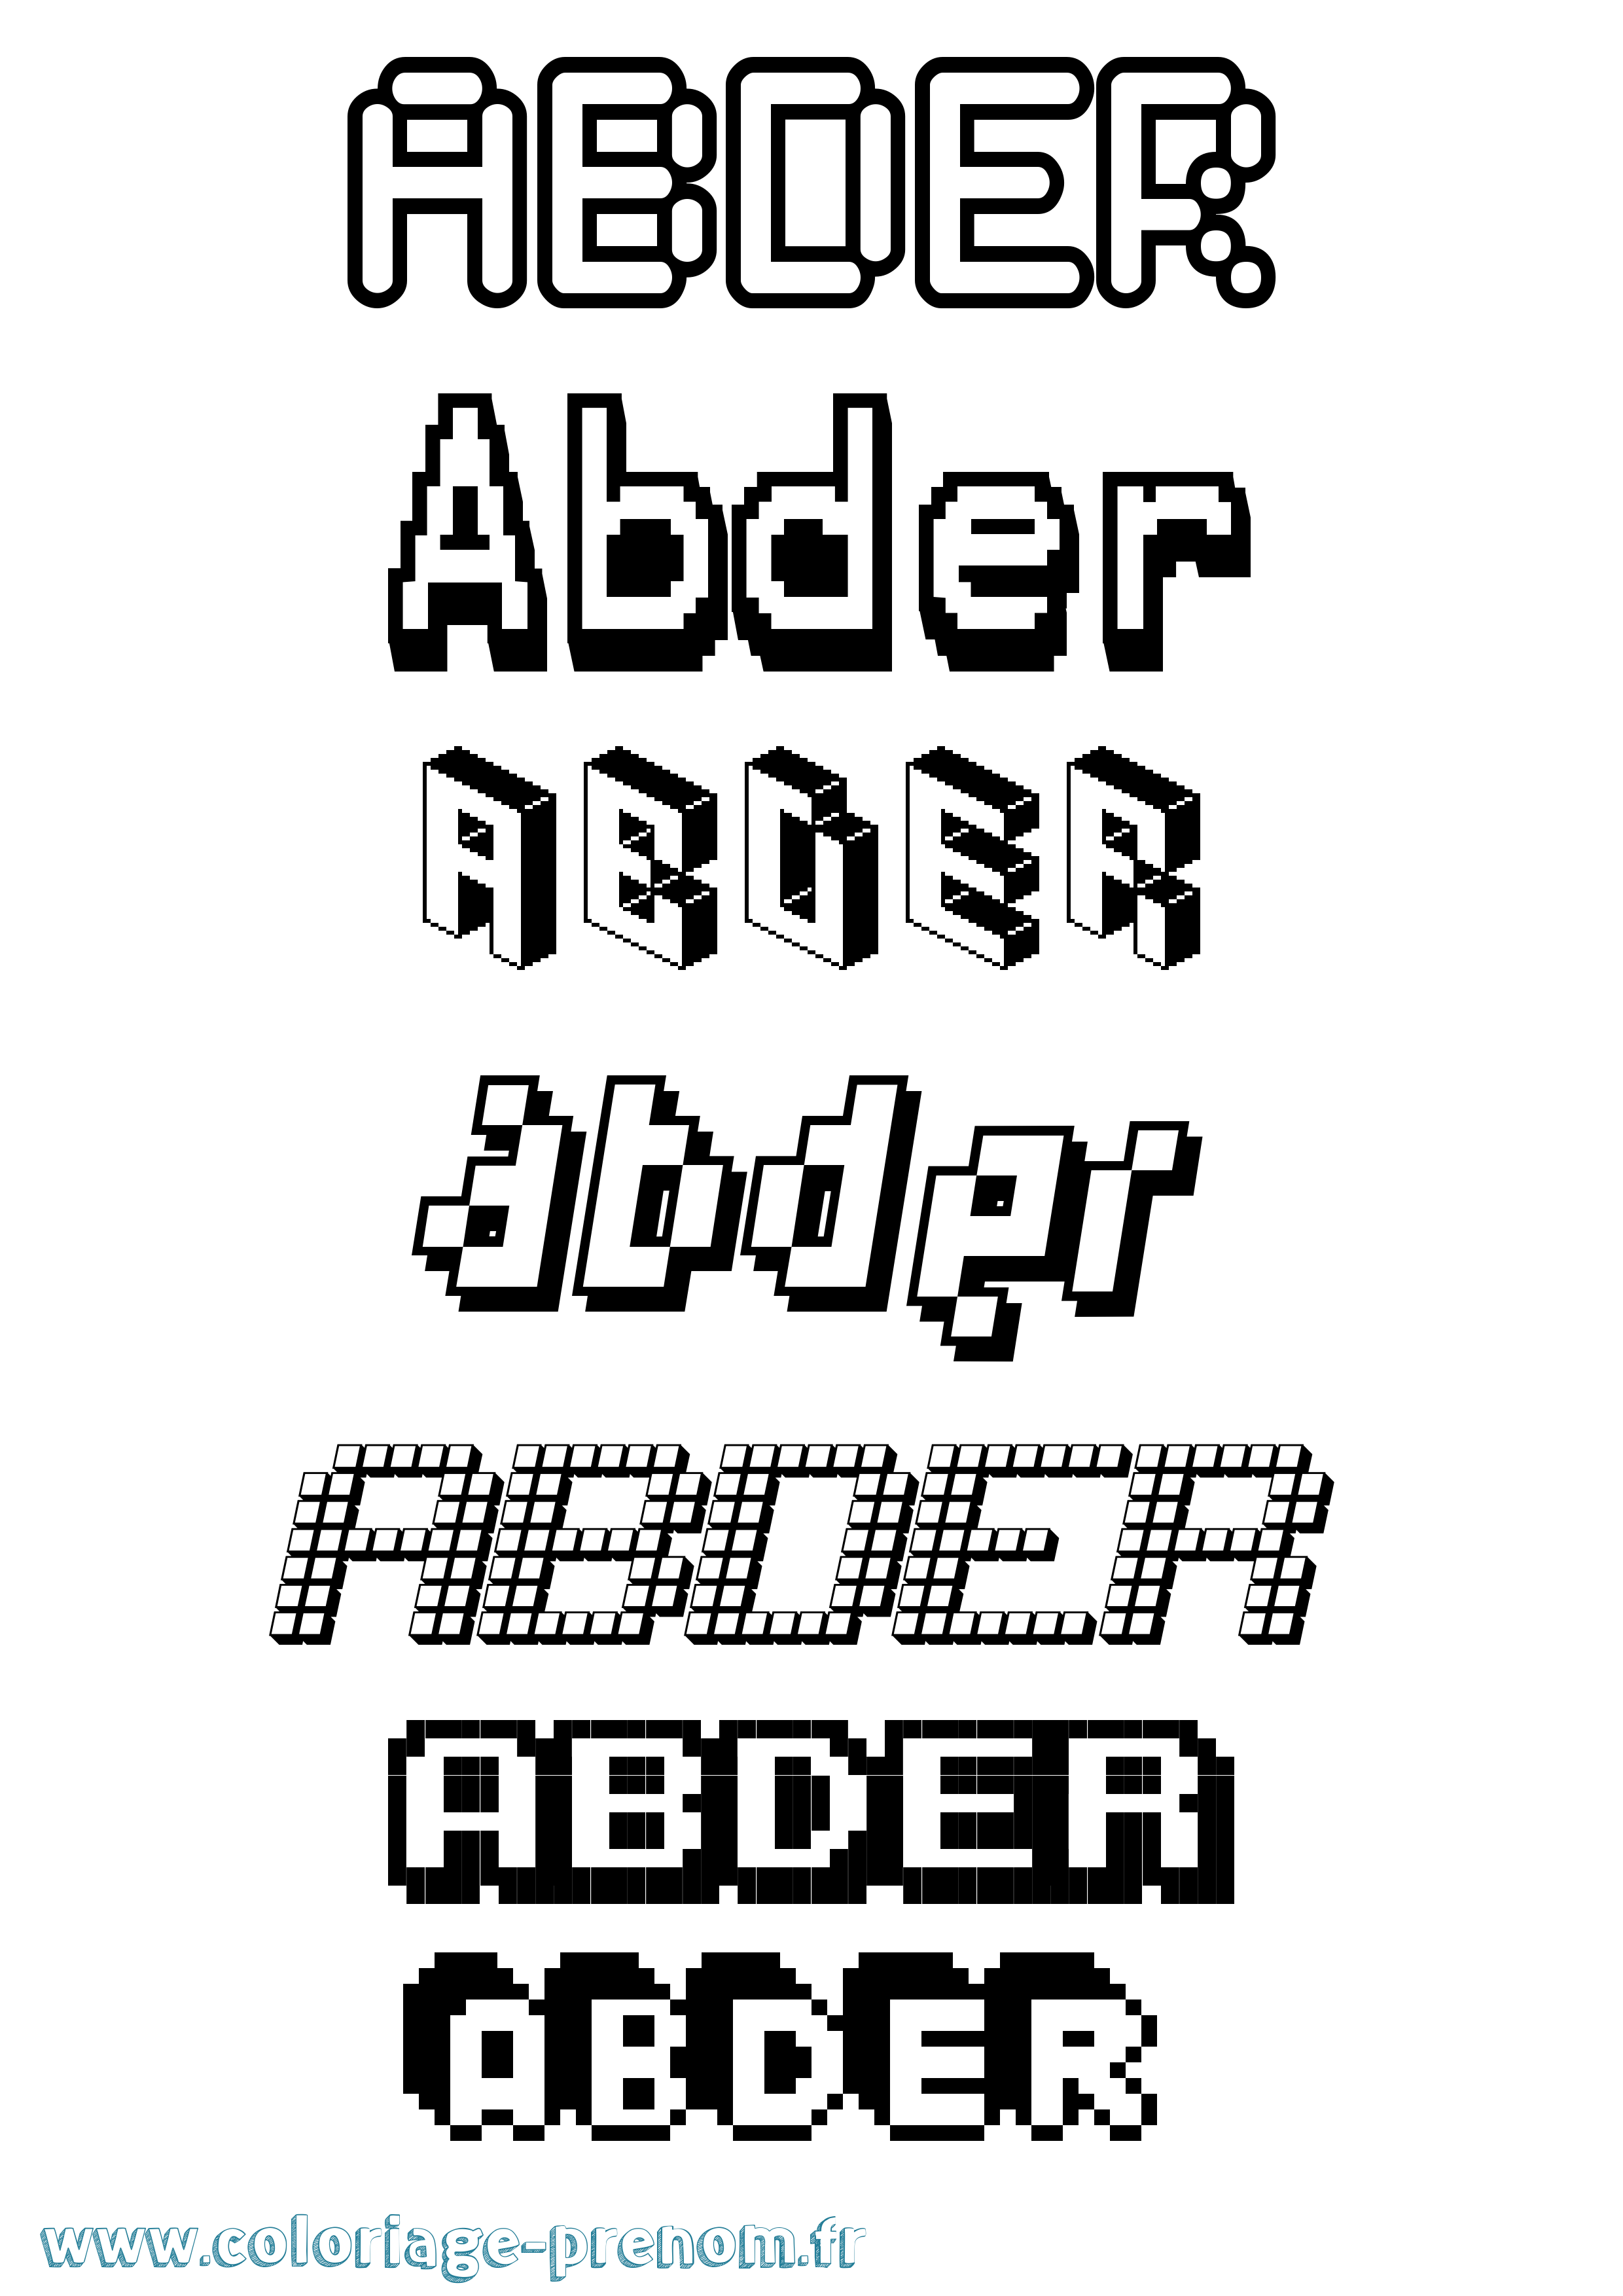 Coloriage prénom Abder Pixel